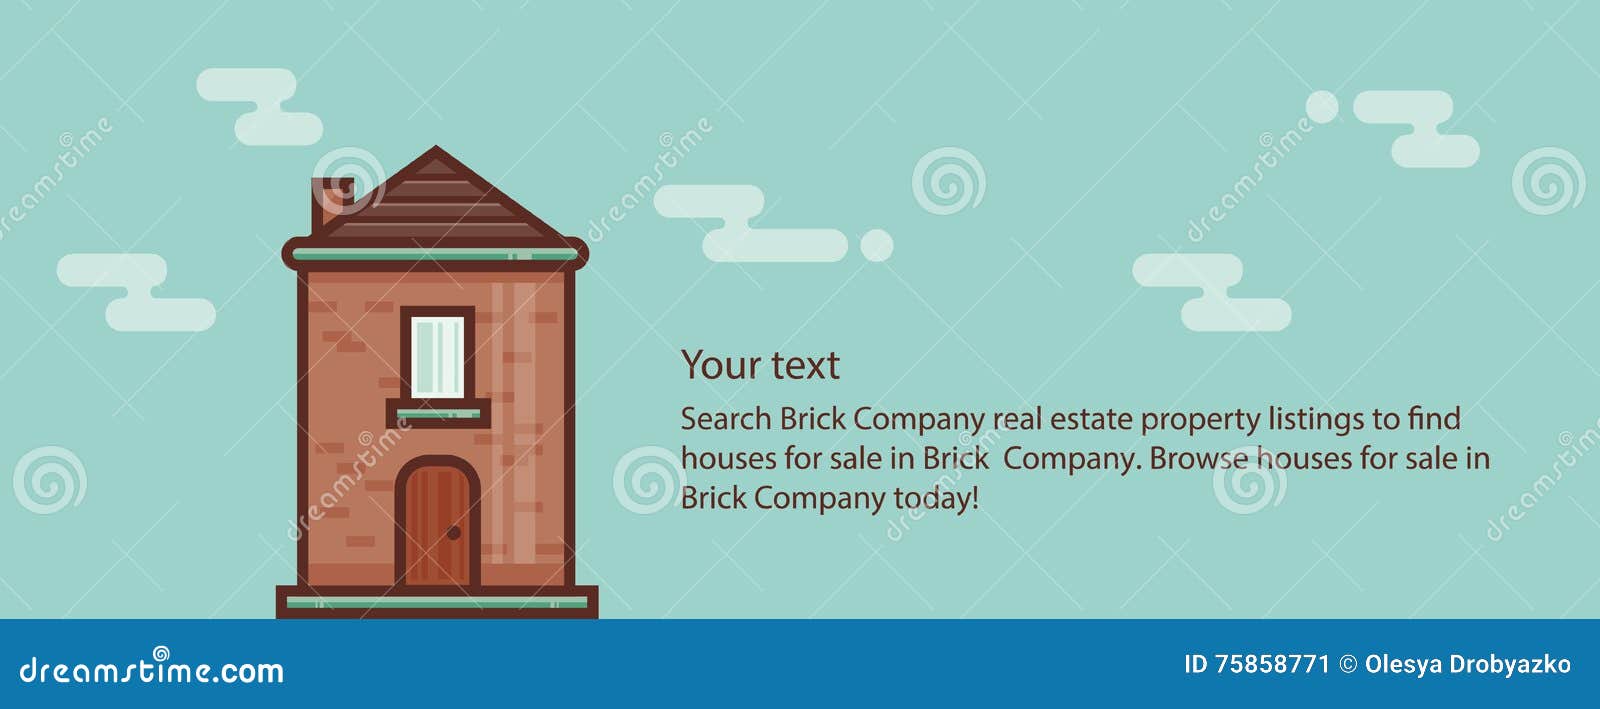 Brick Cottage House Illustration For Web Banner Modern Trendy